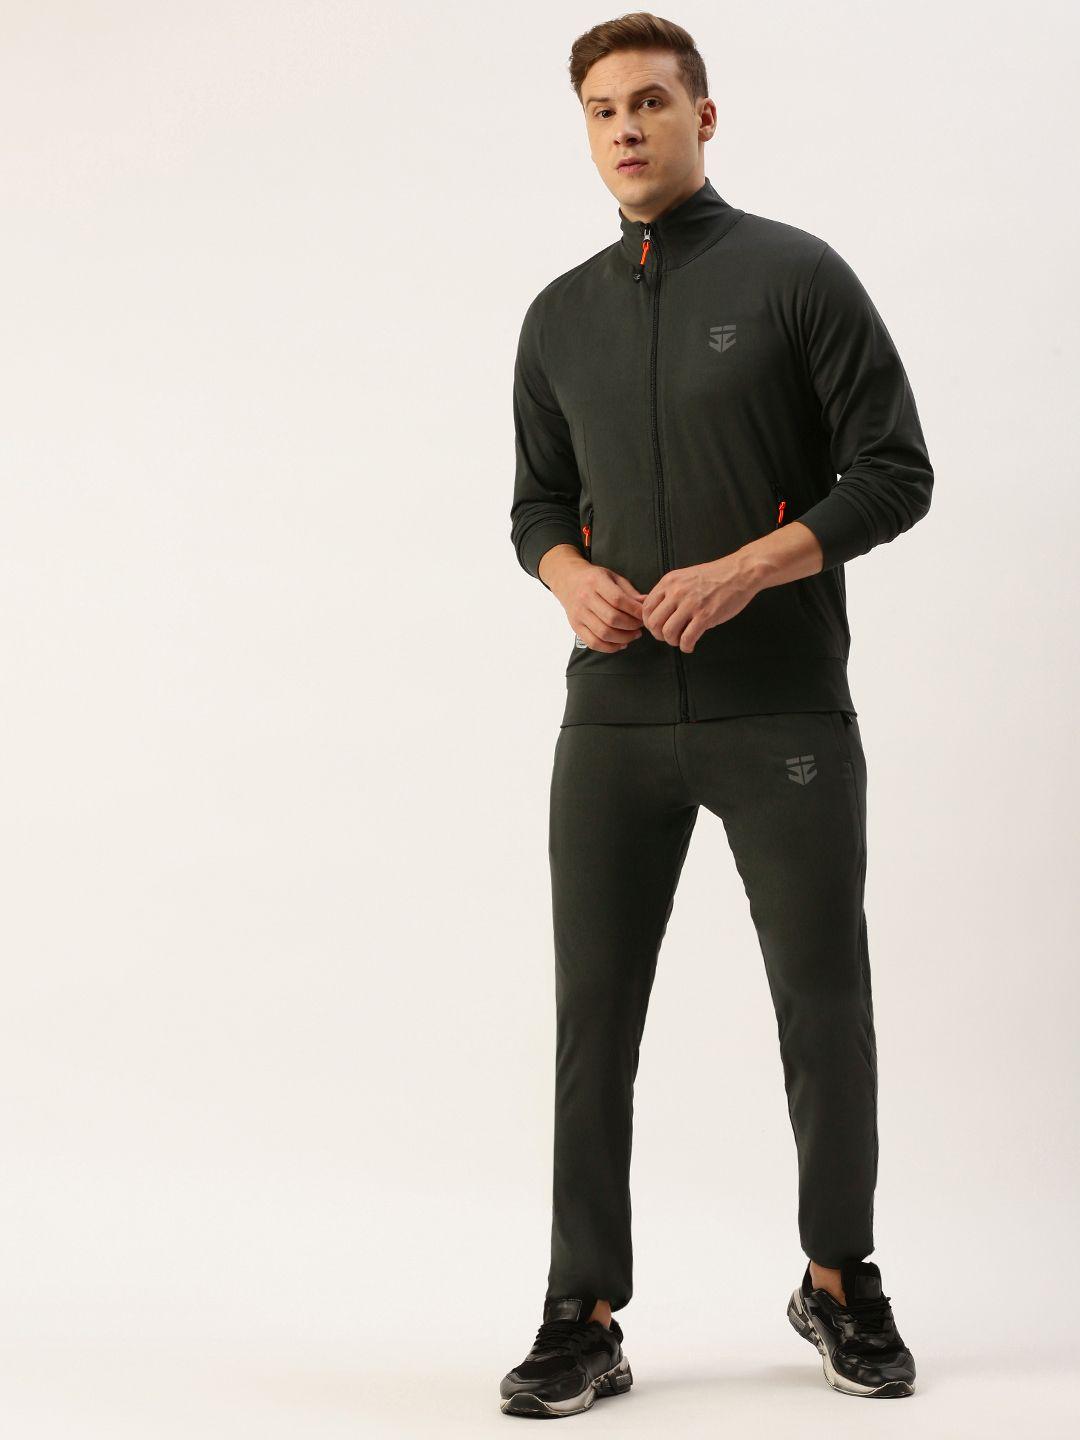 sports52 wear men brand logo minimal printed training tracksuit